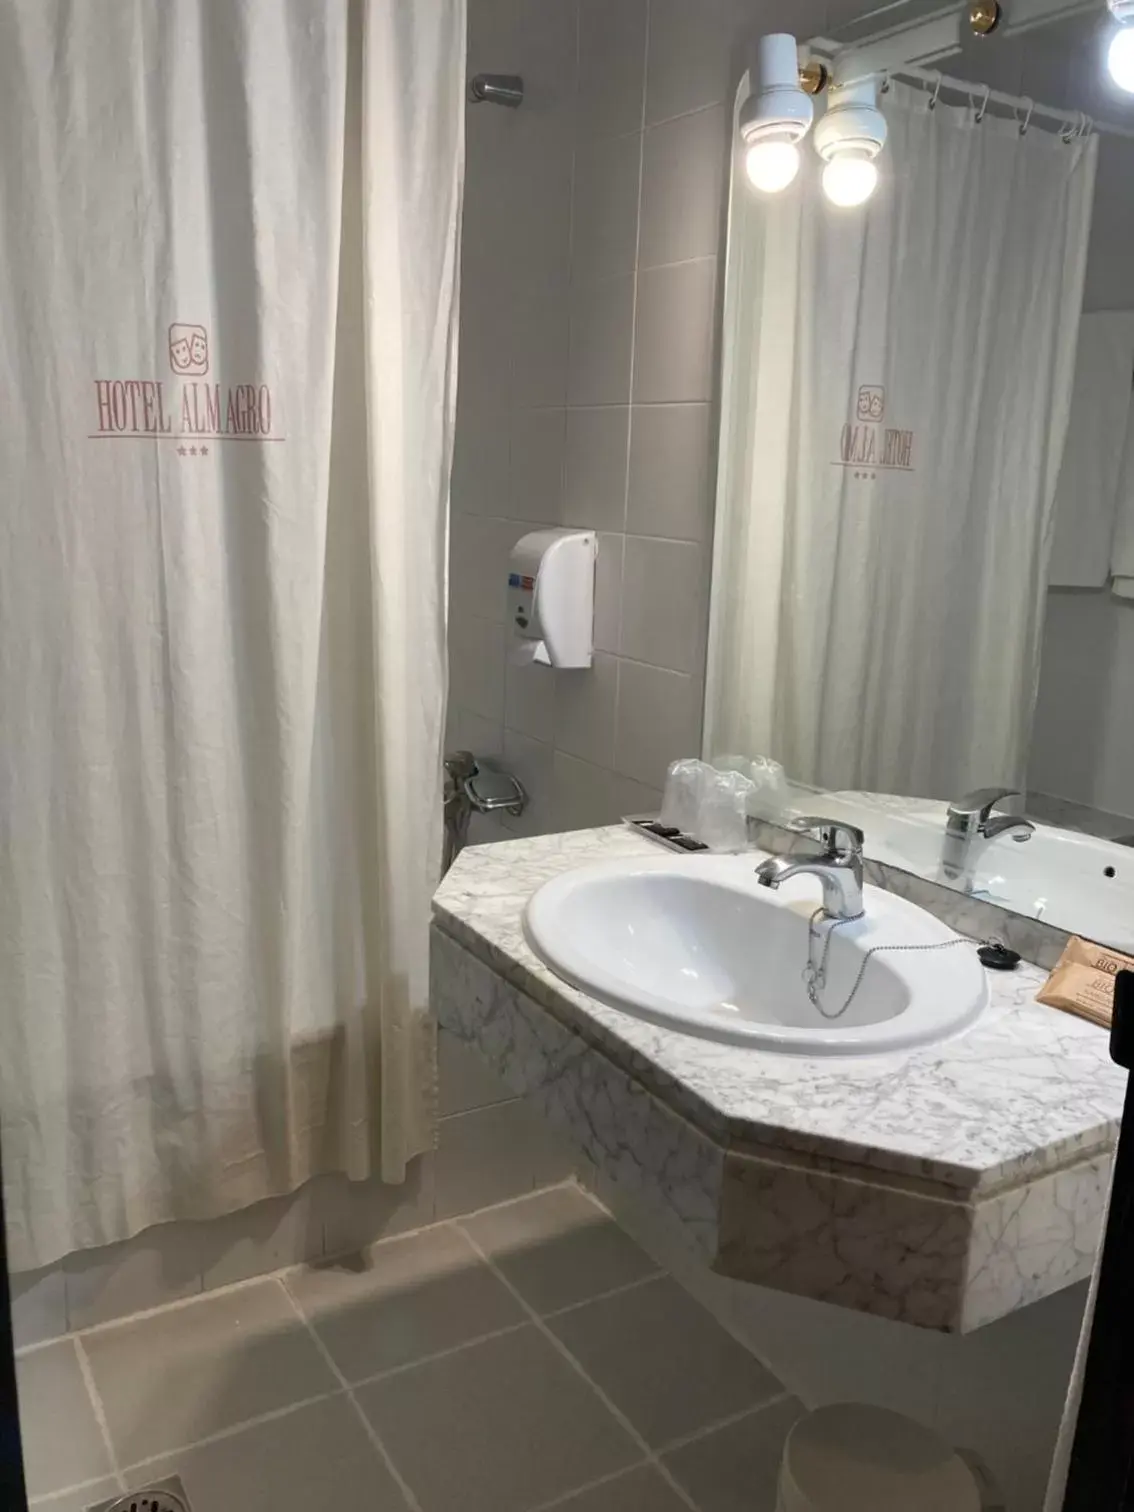 Bathroom in Hotel Almagro